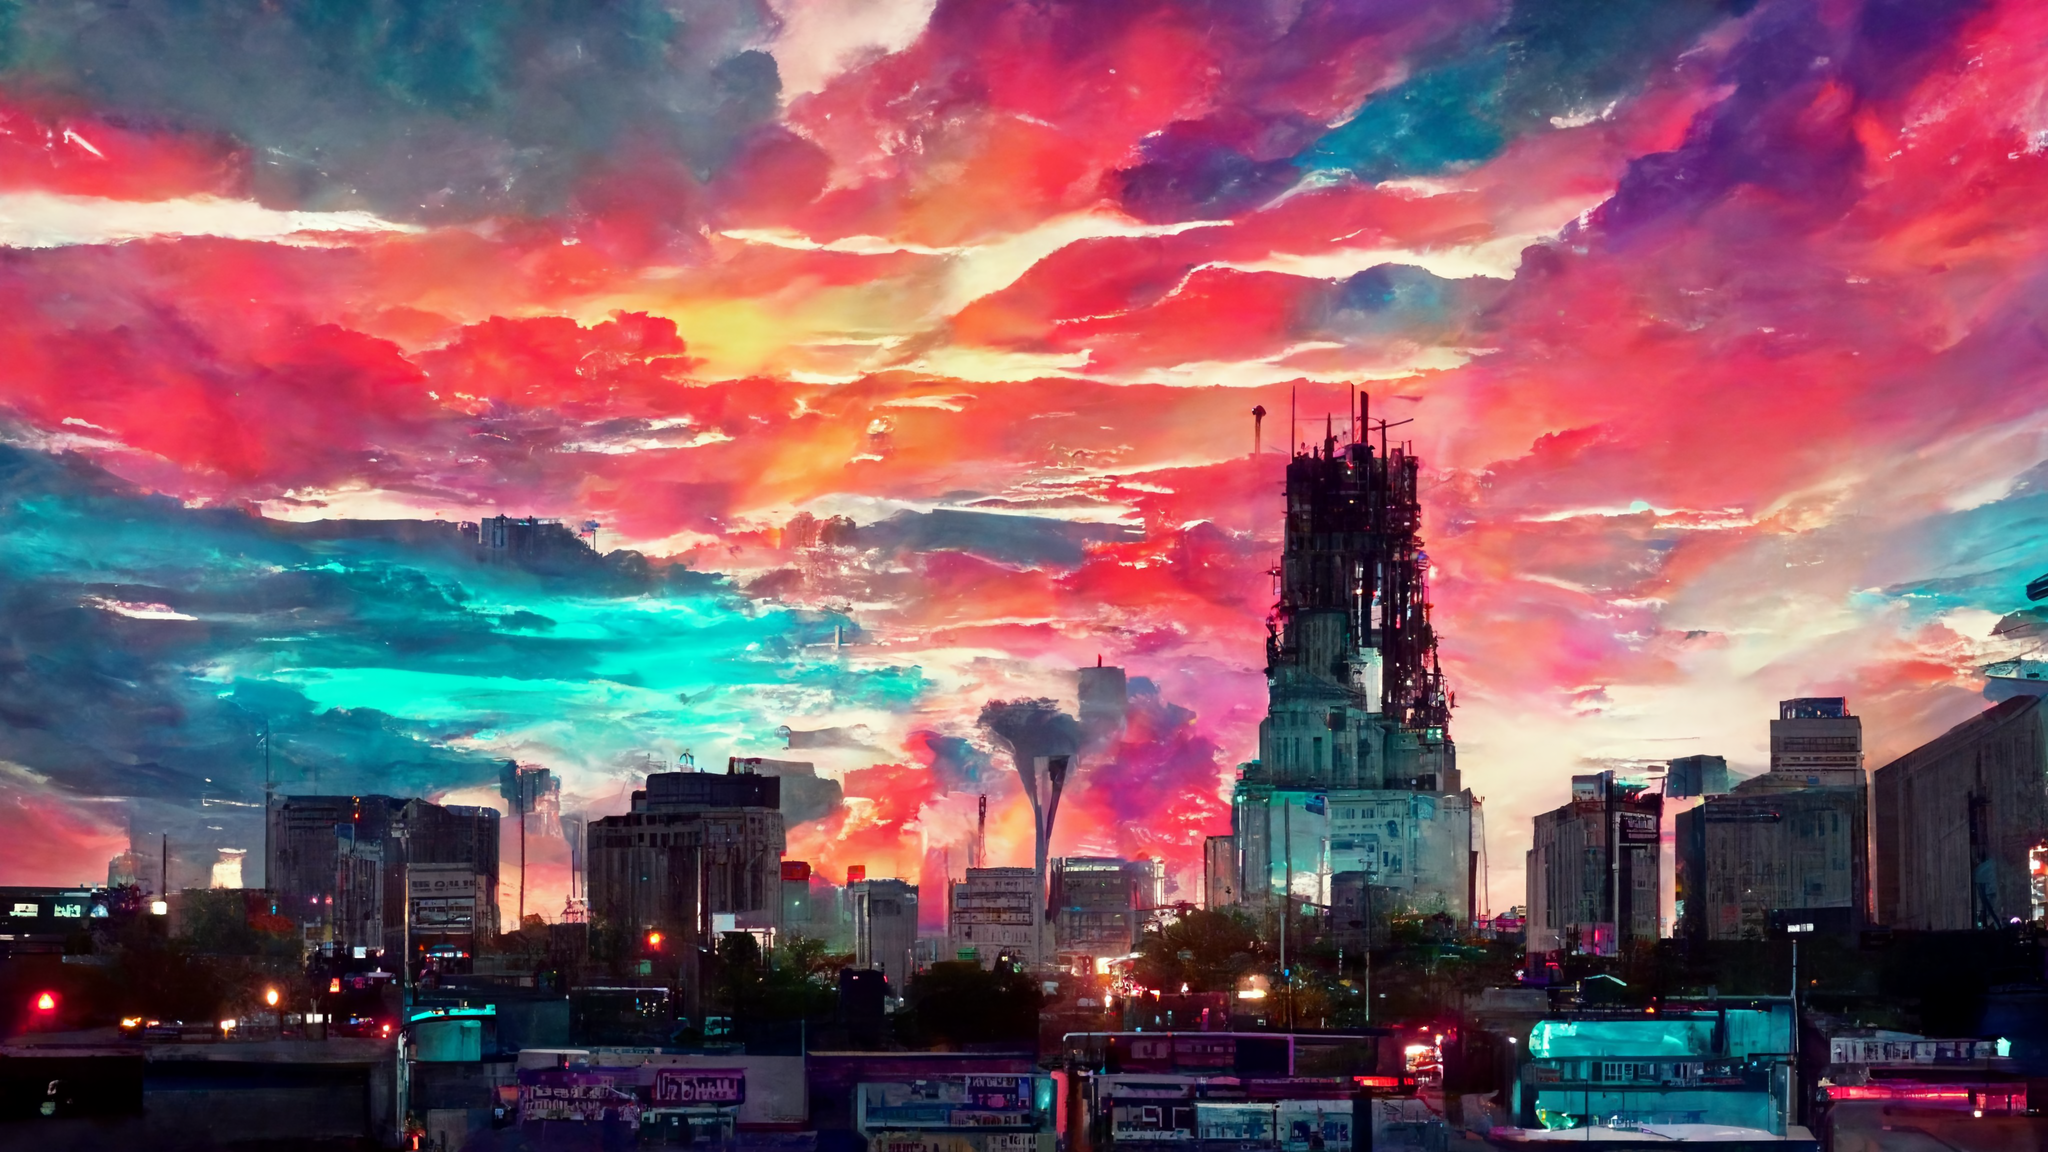 General 2048x1152 AI art clouds vaporwave city sunset red sky house fantasy city